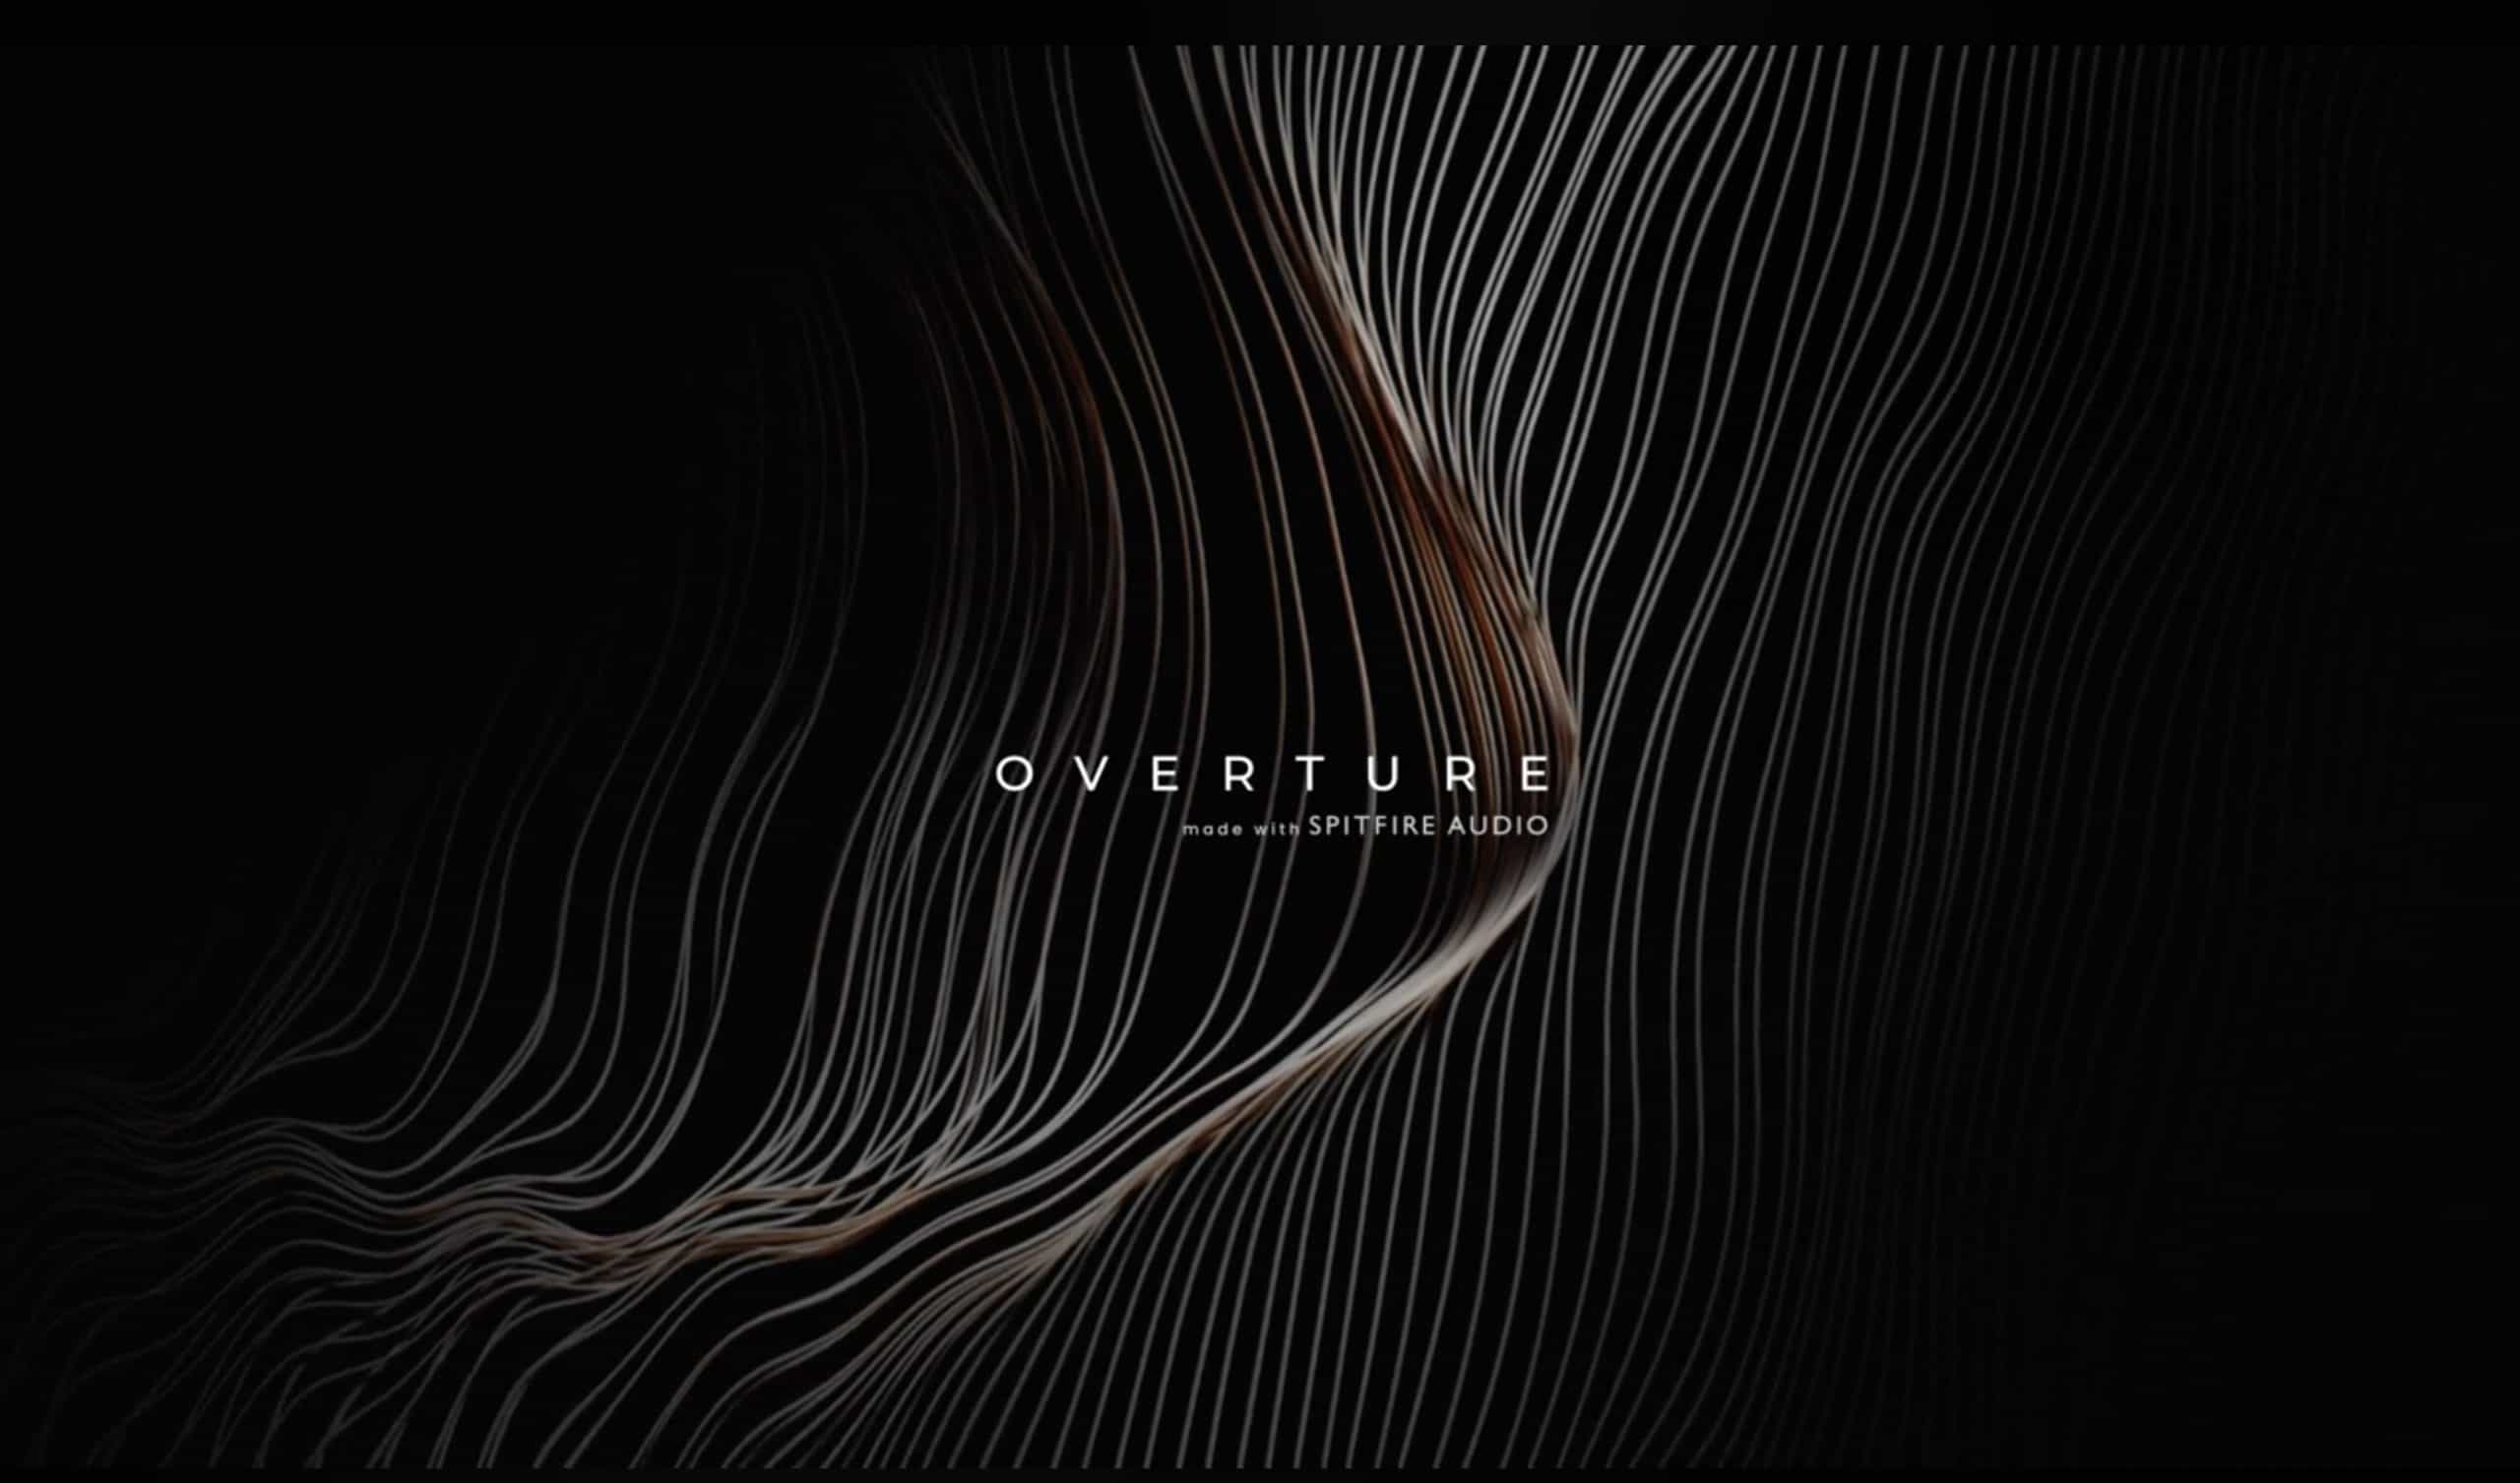 Overture – an Arcade Line a Spitfire Audio & Output Collaboration